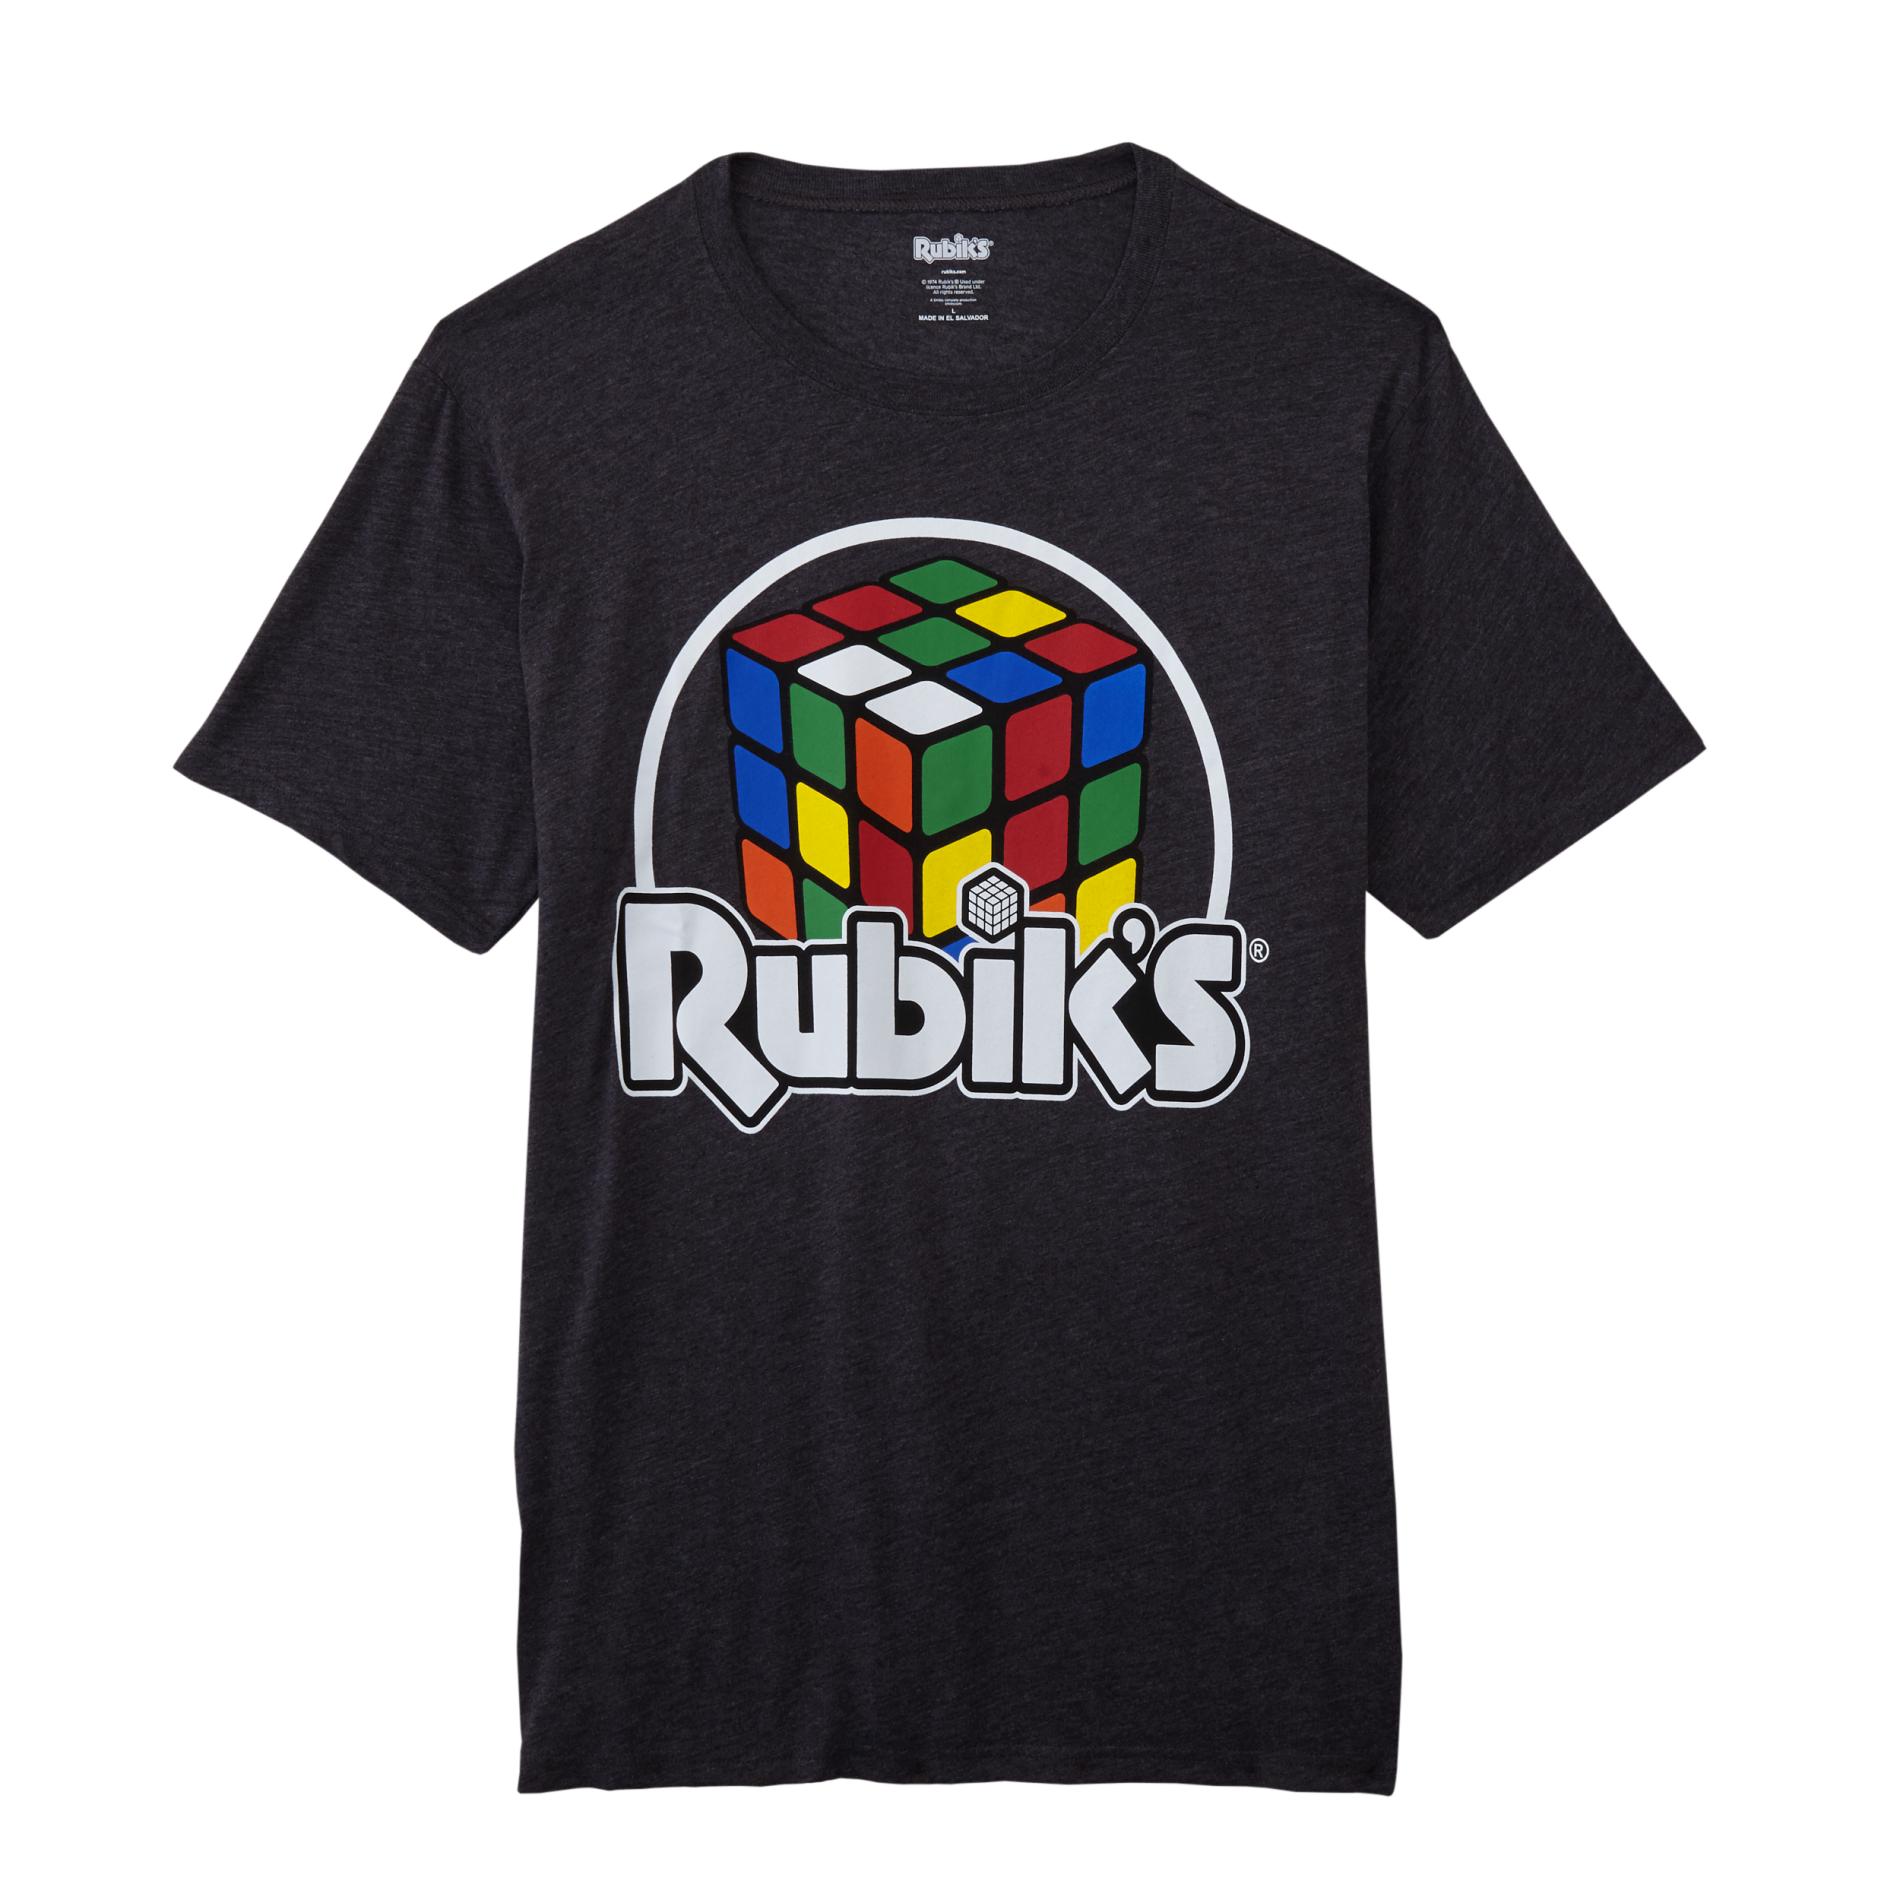 Young Men's Graphic T-Shirt - Rubik's Cube